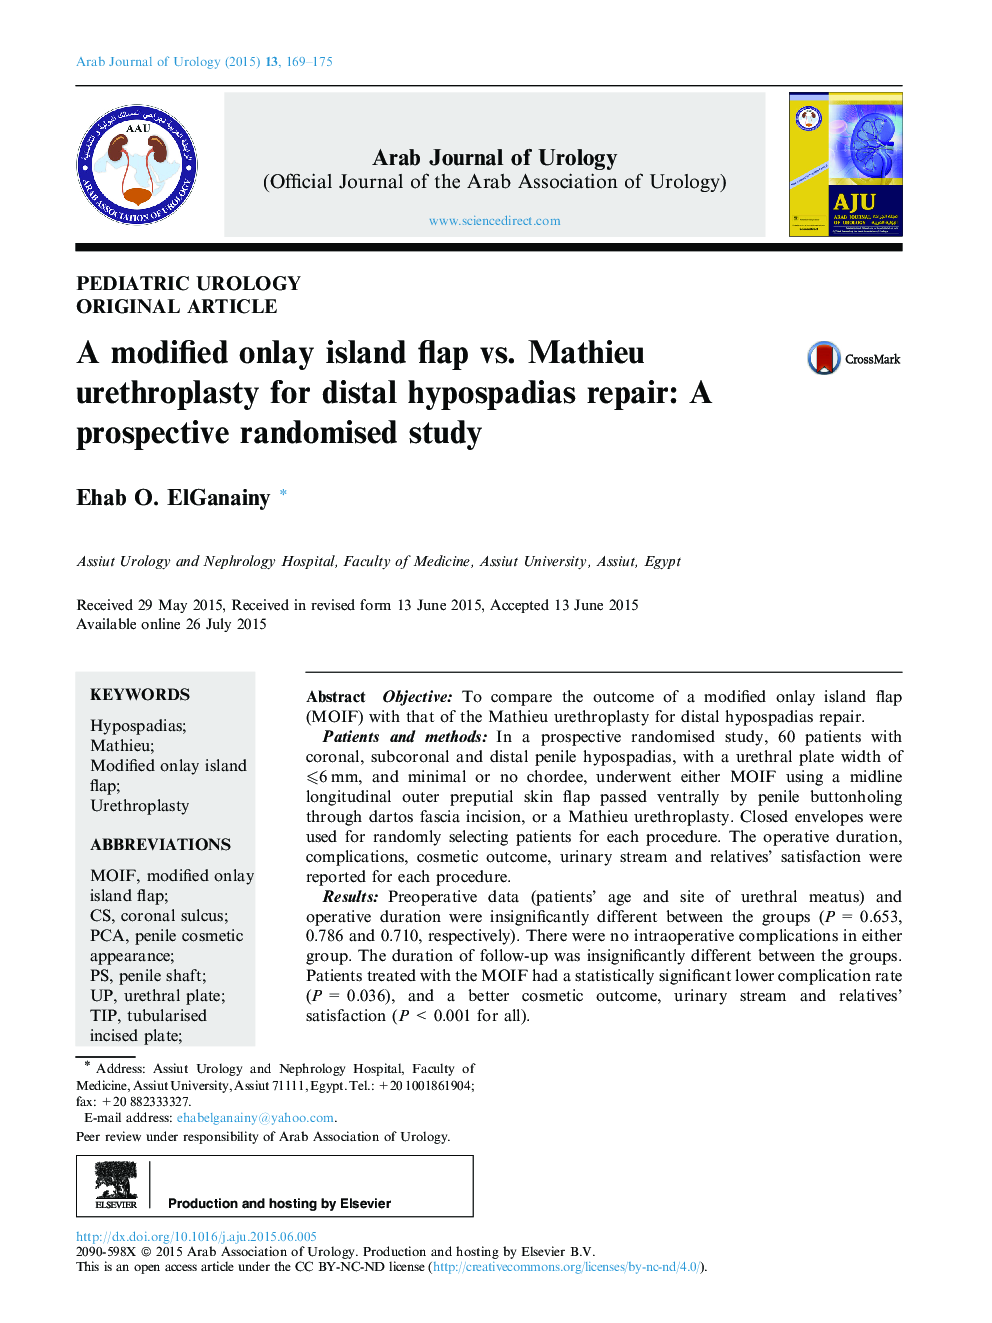 A modified onlay island flap vs. Mathieu urethroplasty for distal hypospadias repair: A prospective randomised study 